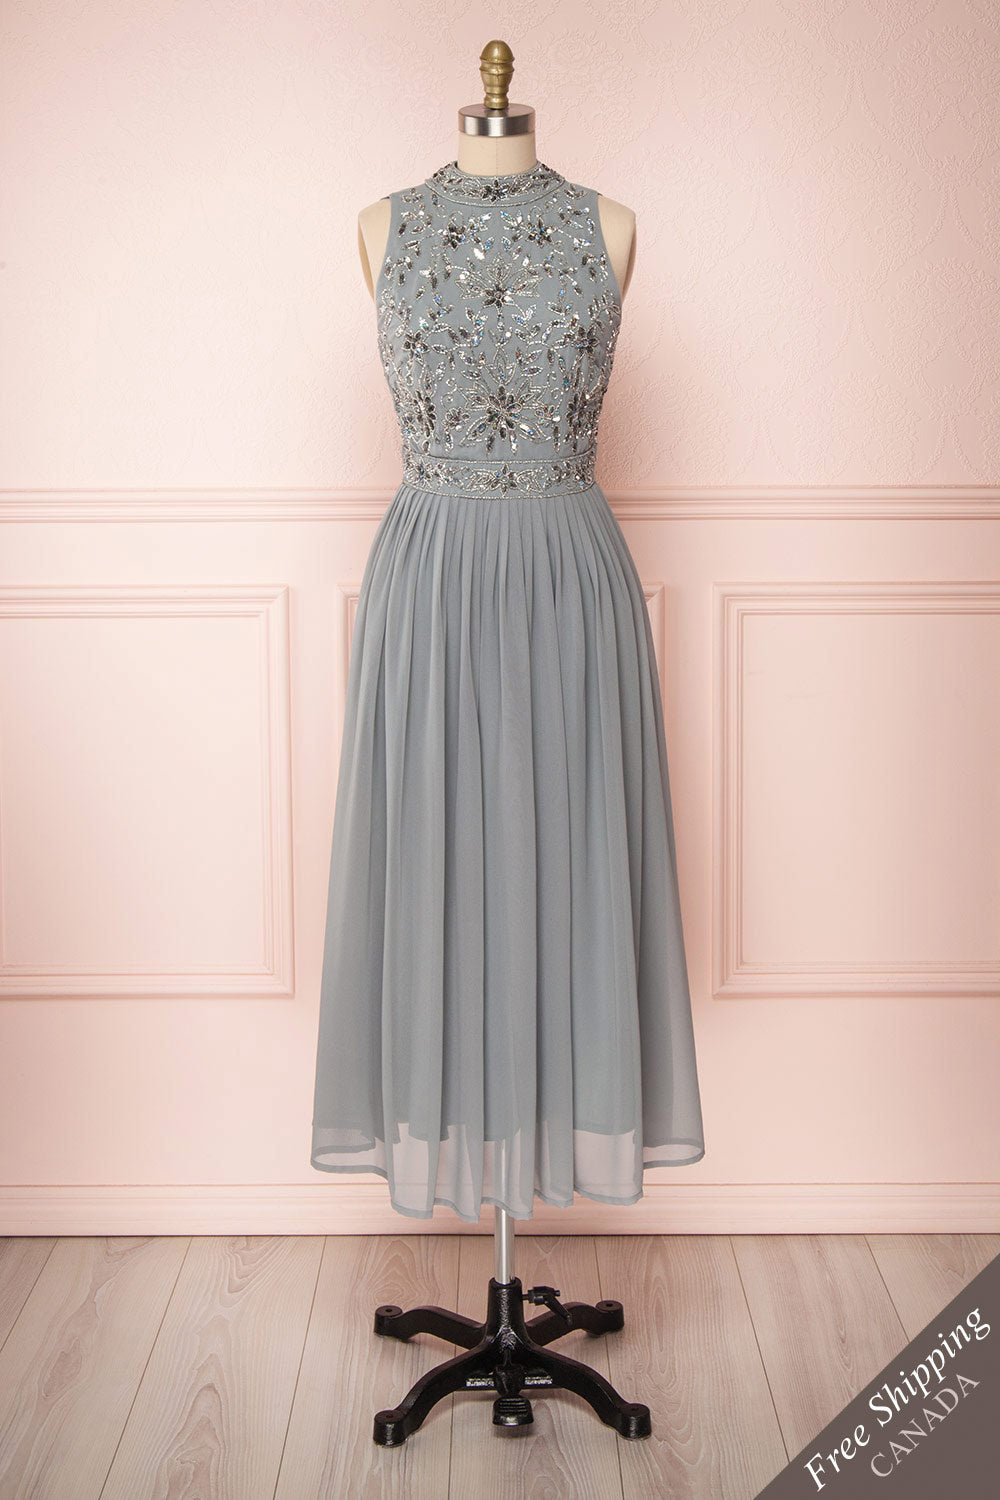 Ezpeleta Blue Grey Chiffon A-Line Dress with Sequins | Boutique 1861